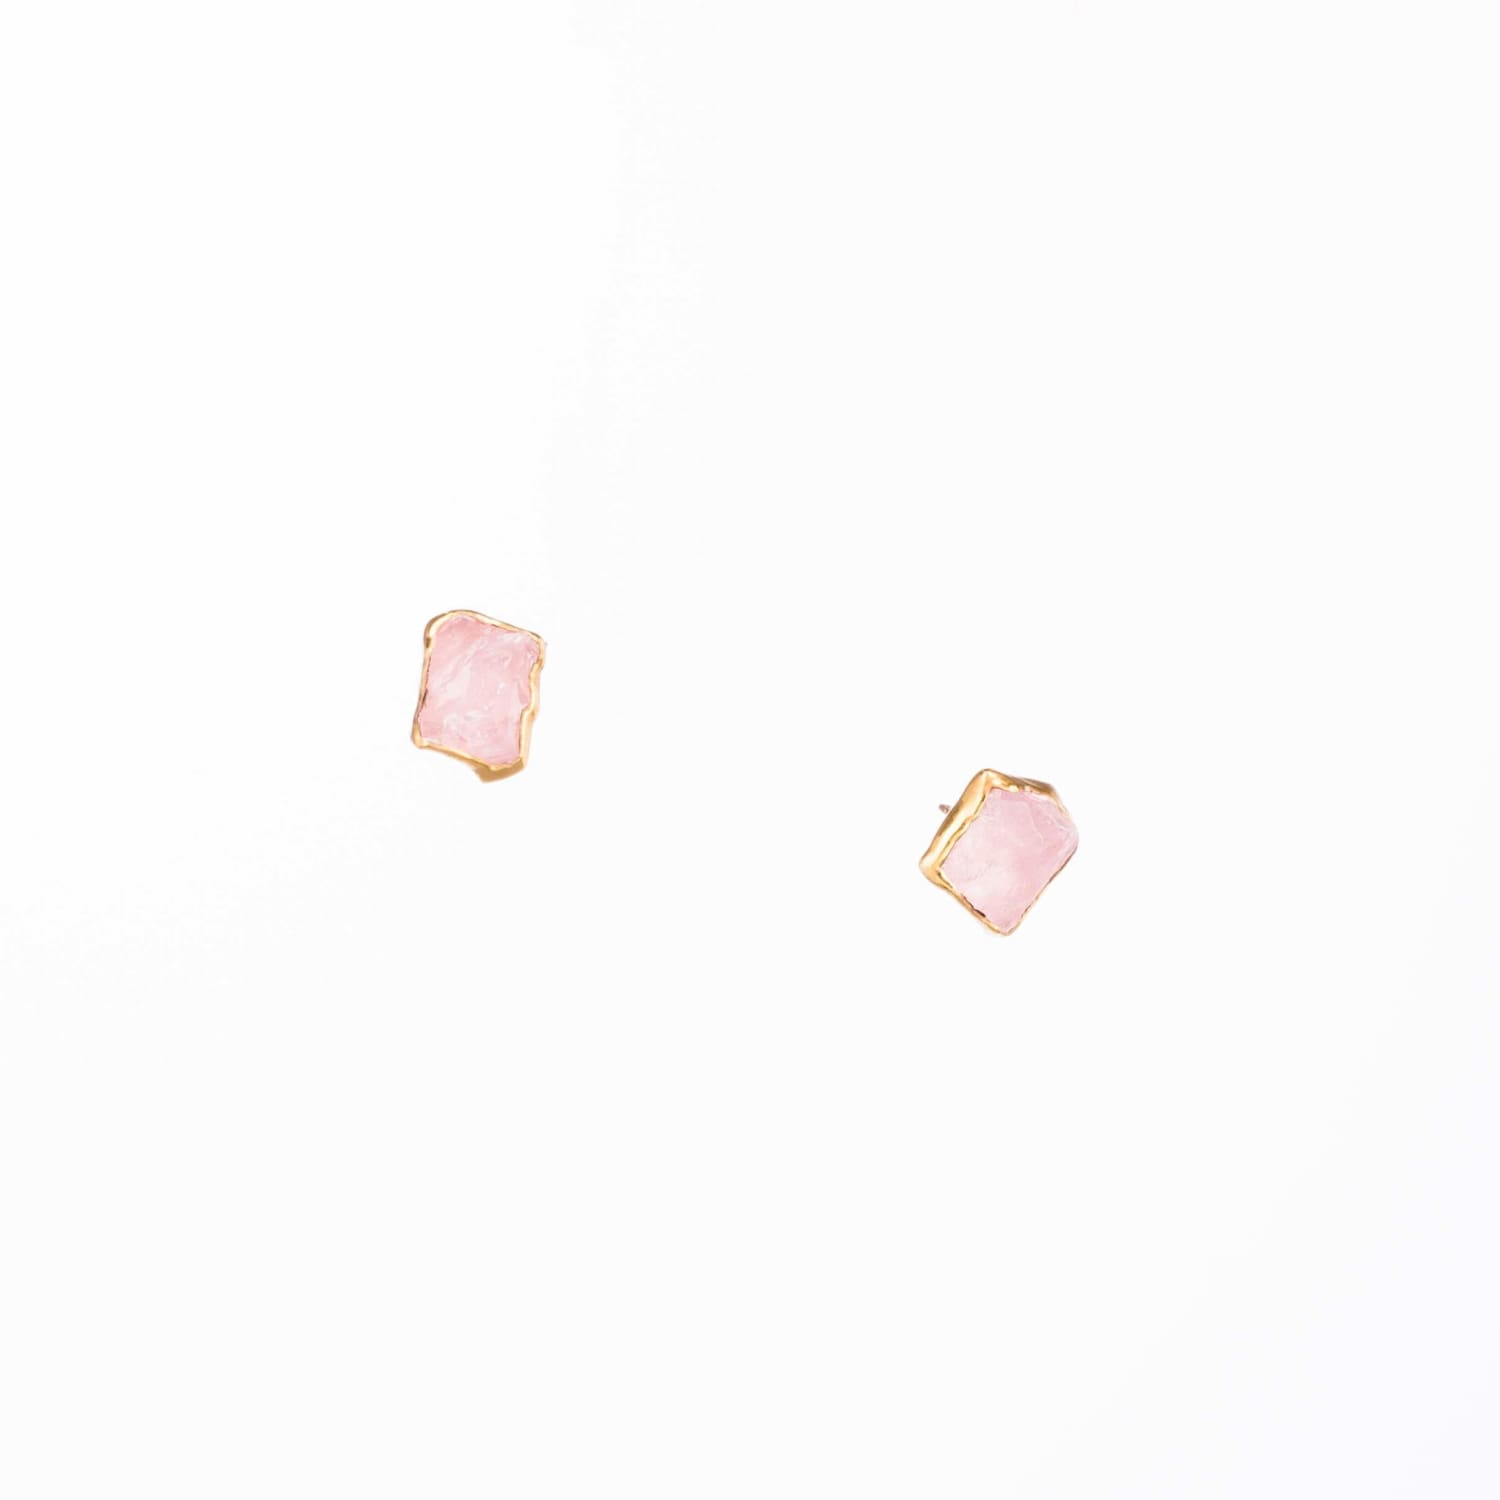 Large Raw Rose Quartz Stud Earrings Gemstone Jewelry Rough